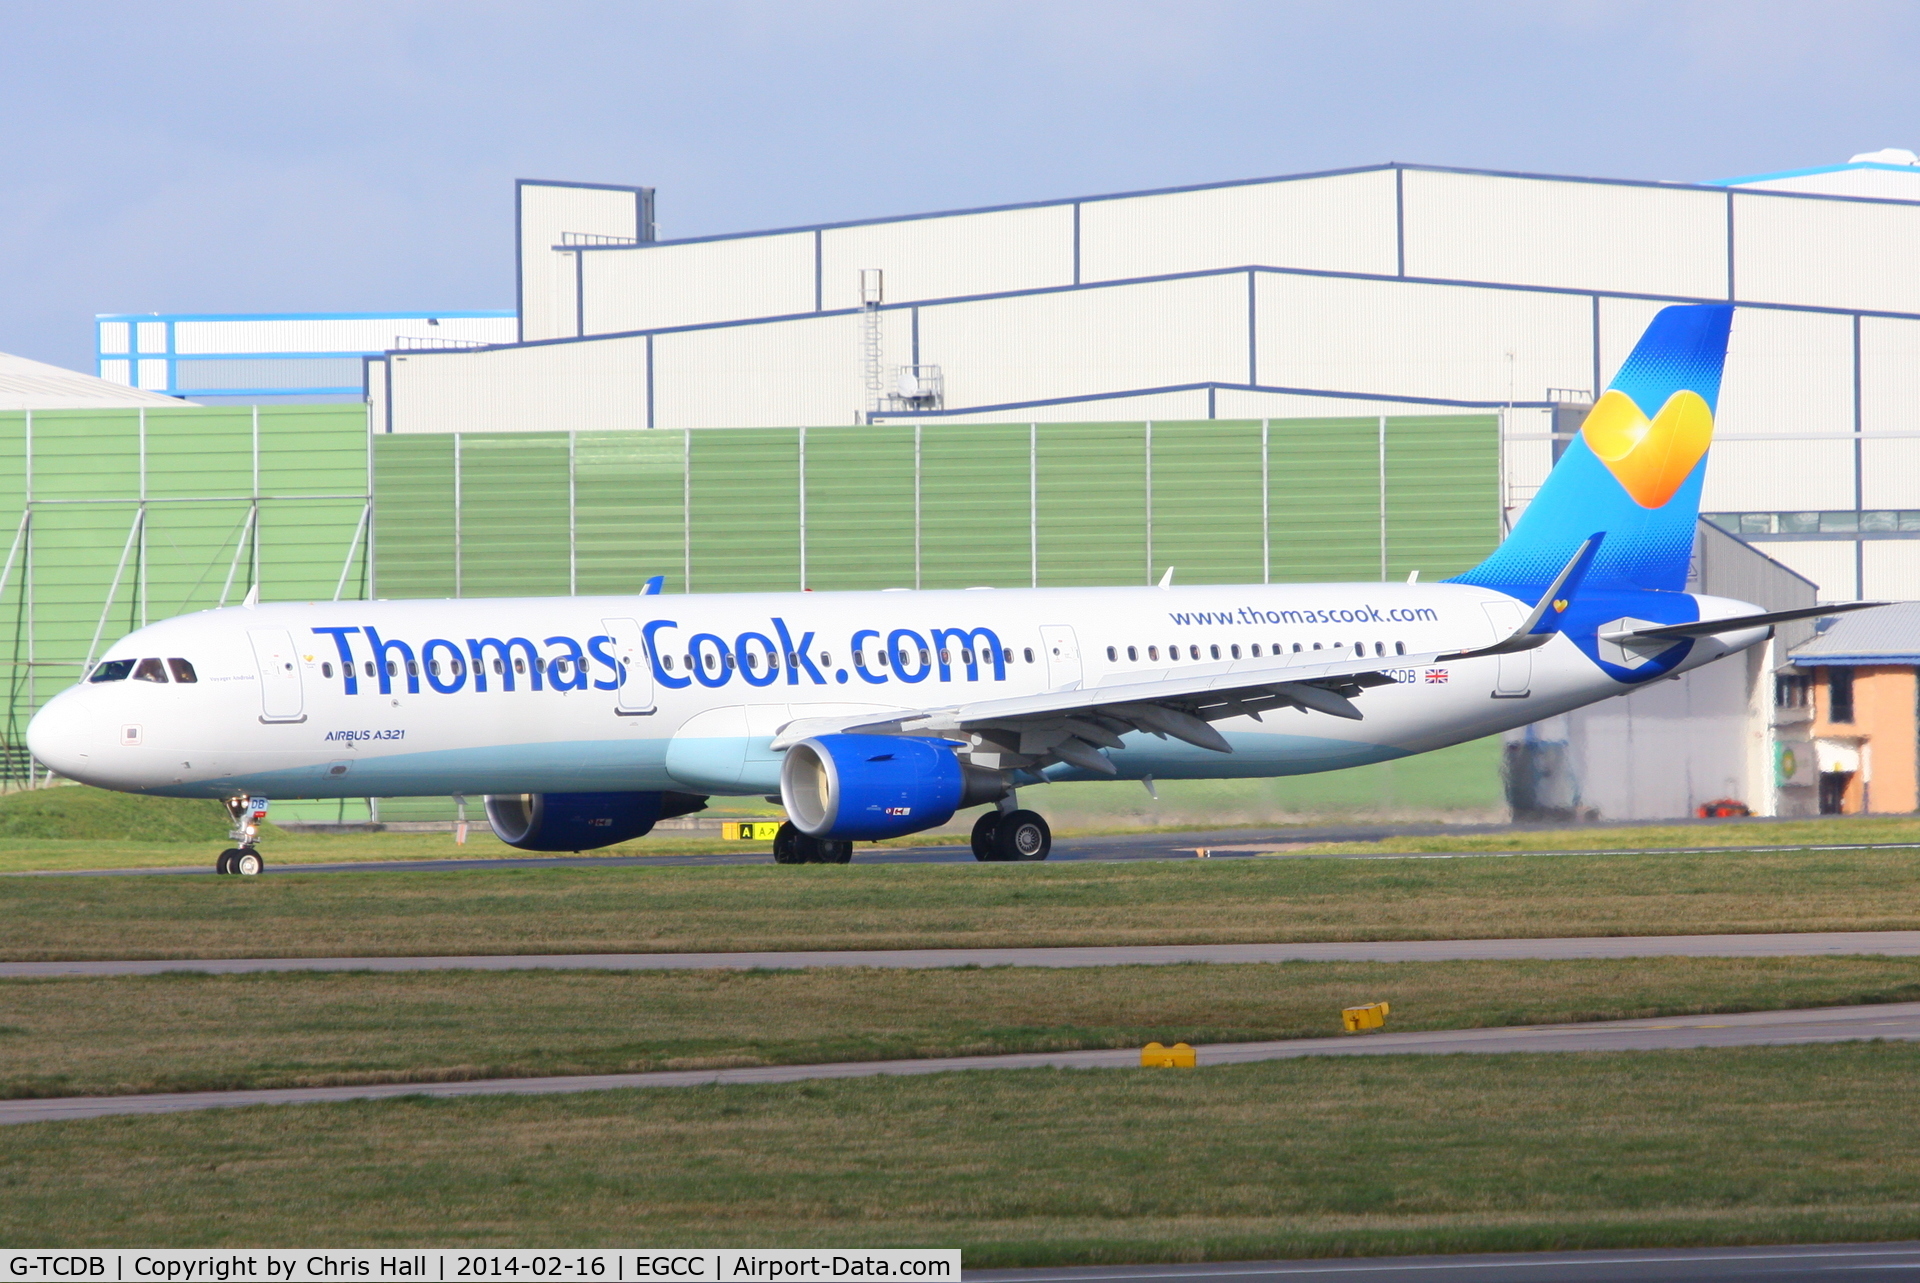 G-TCDB, 2013 Airbus A321-211 C/N 5603, Thomas Cook